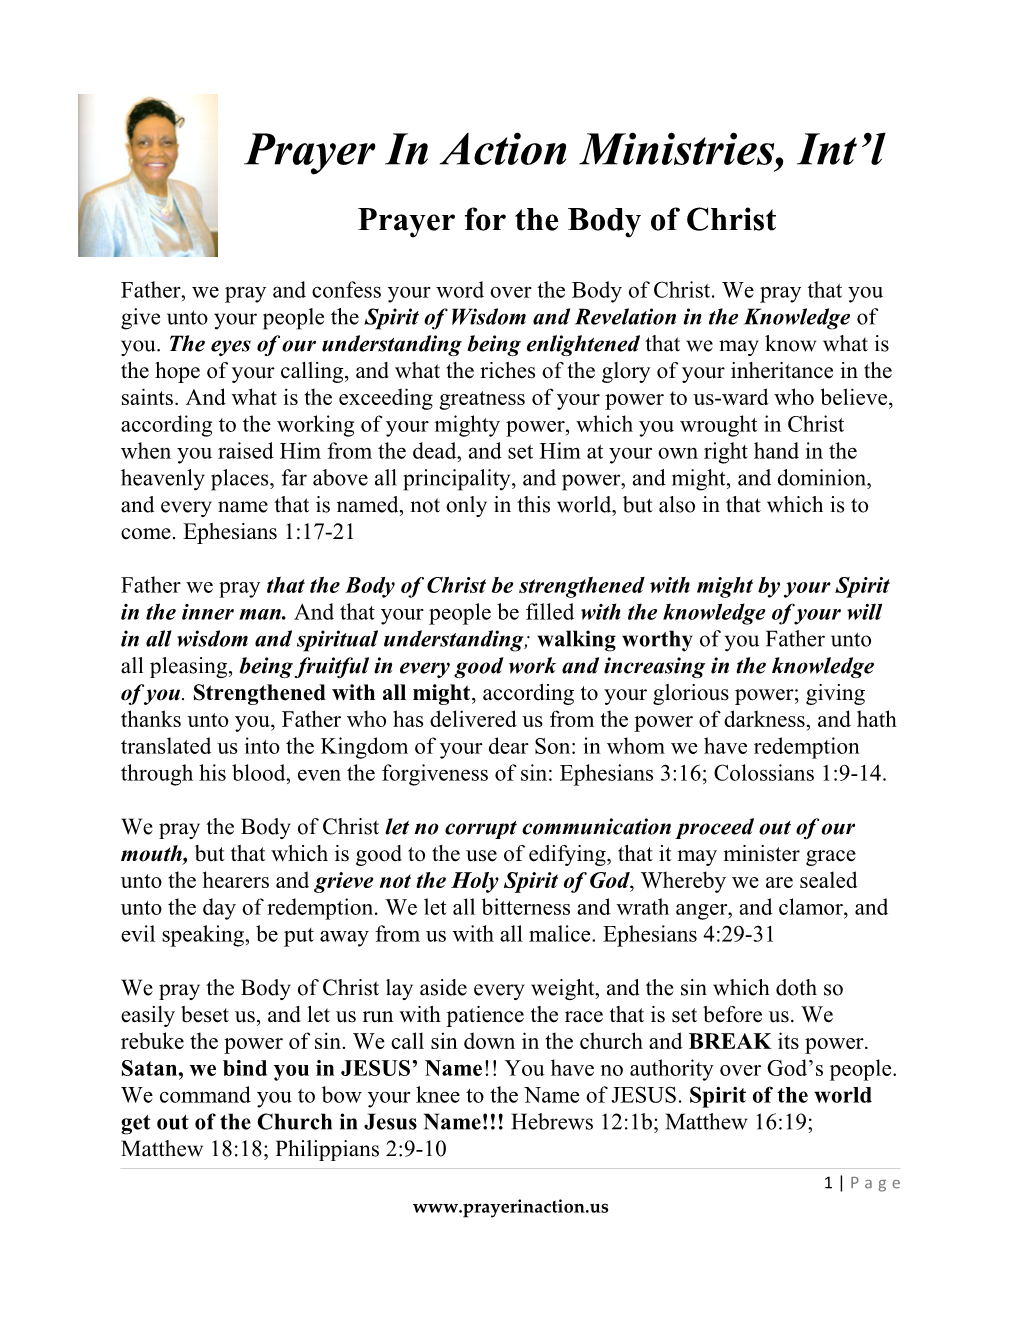 Prayer for the Body of Christ